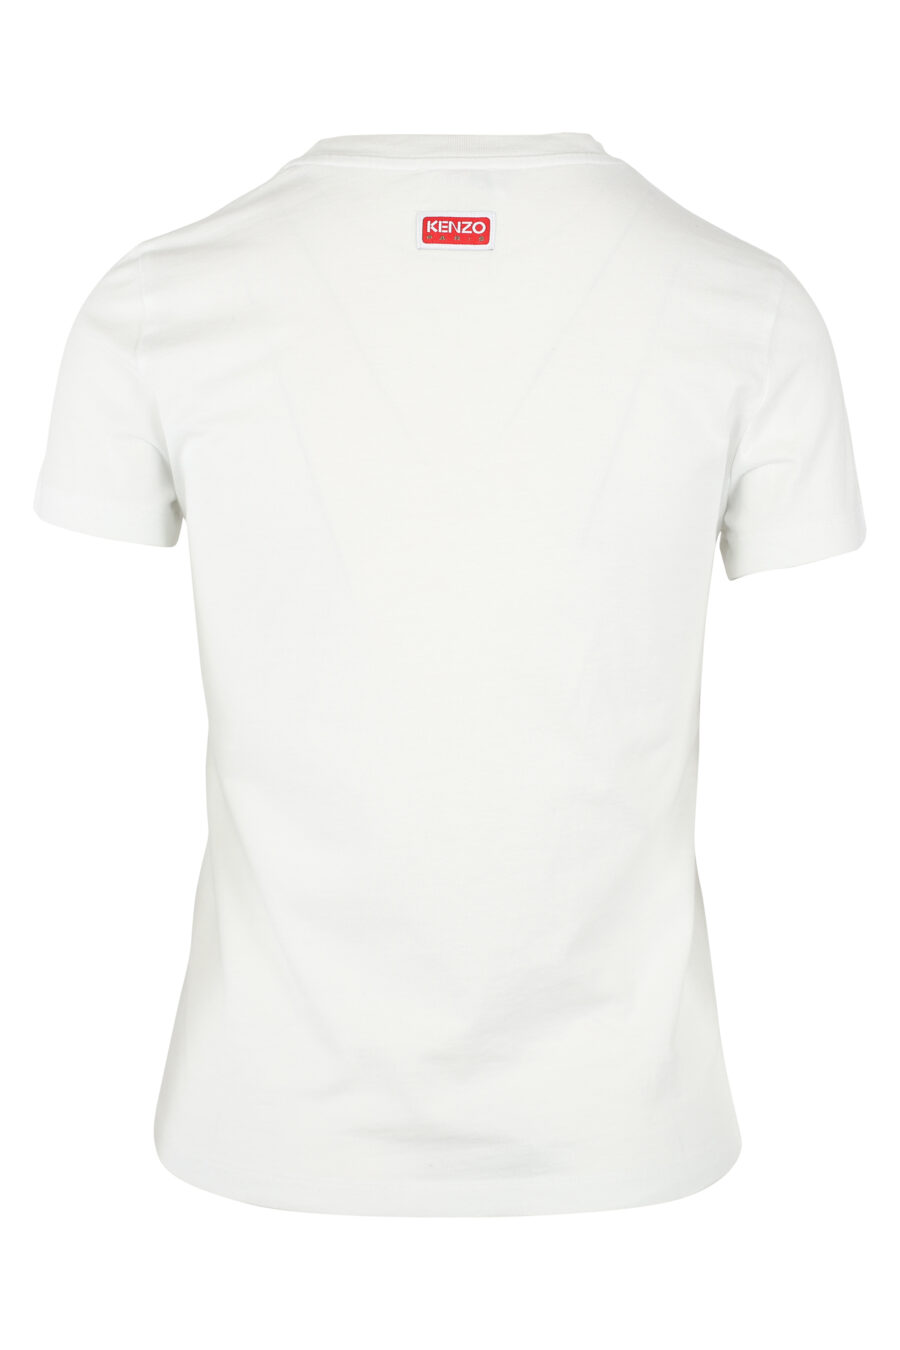 Camiseta blanca con maxilogo tigre - IMG 9531